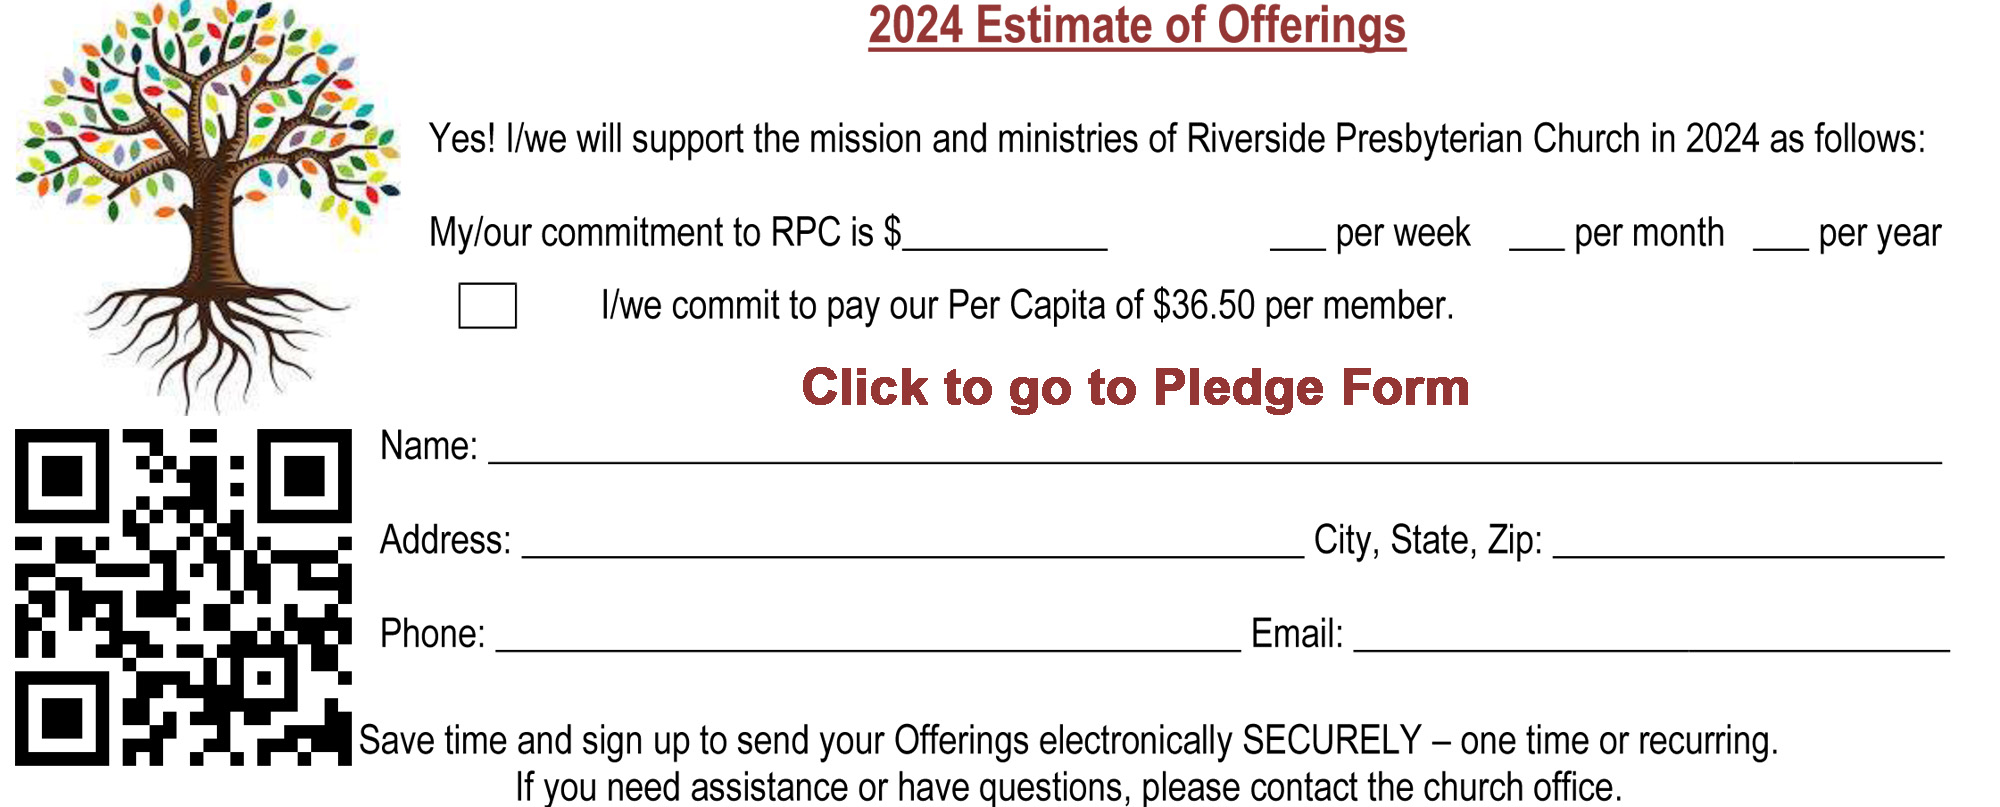 Pledge Card for Riverside Presbyterian Church